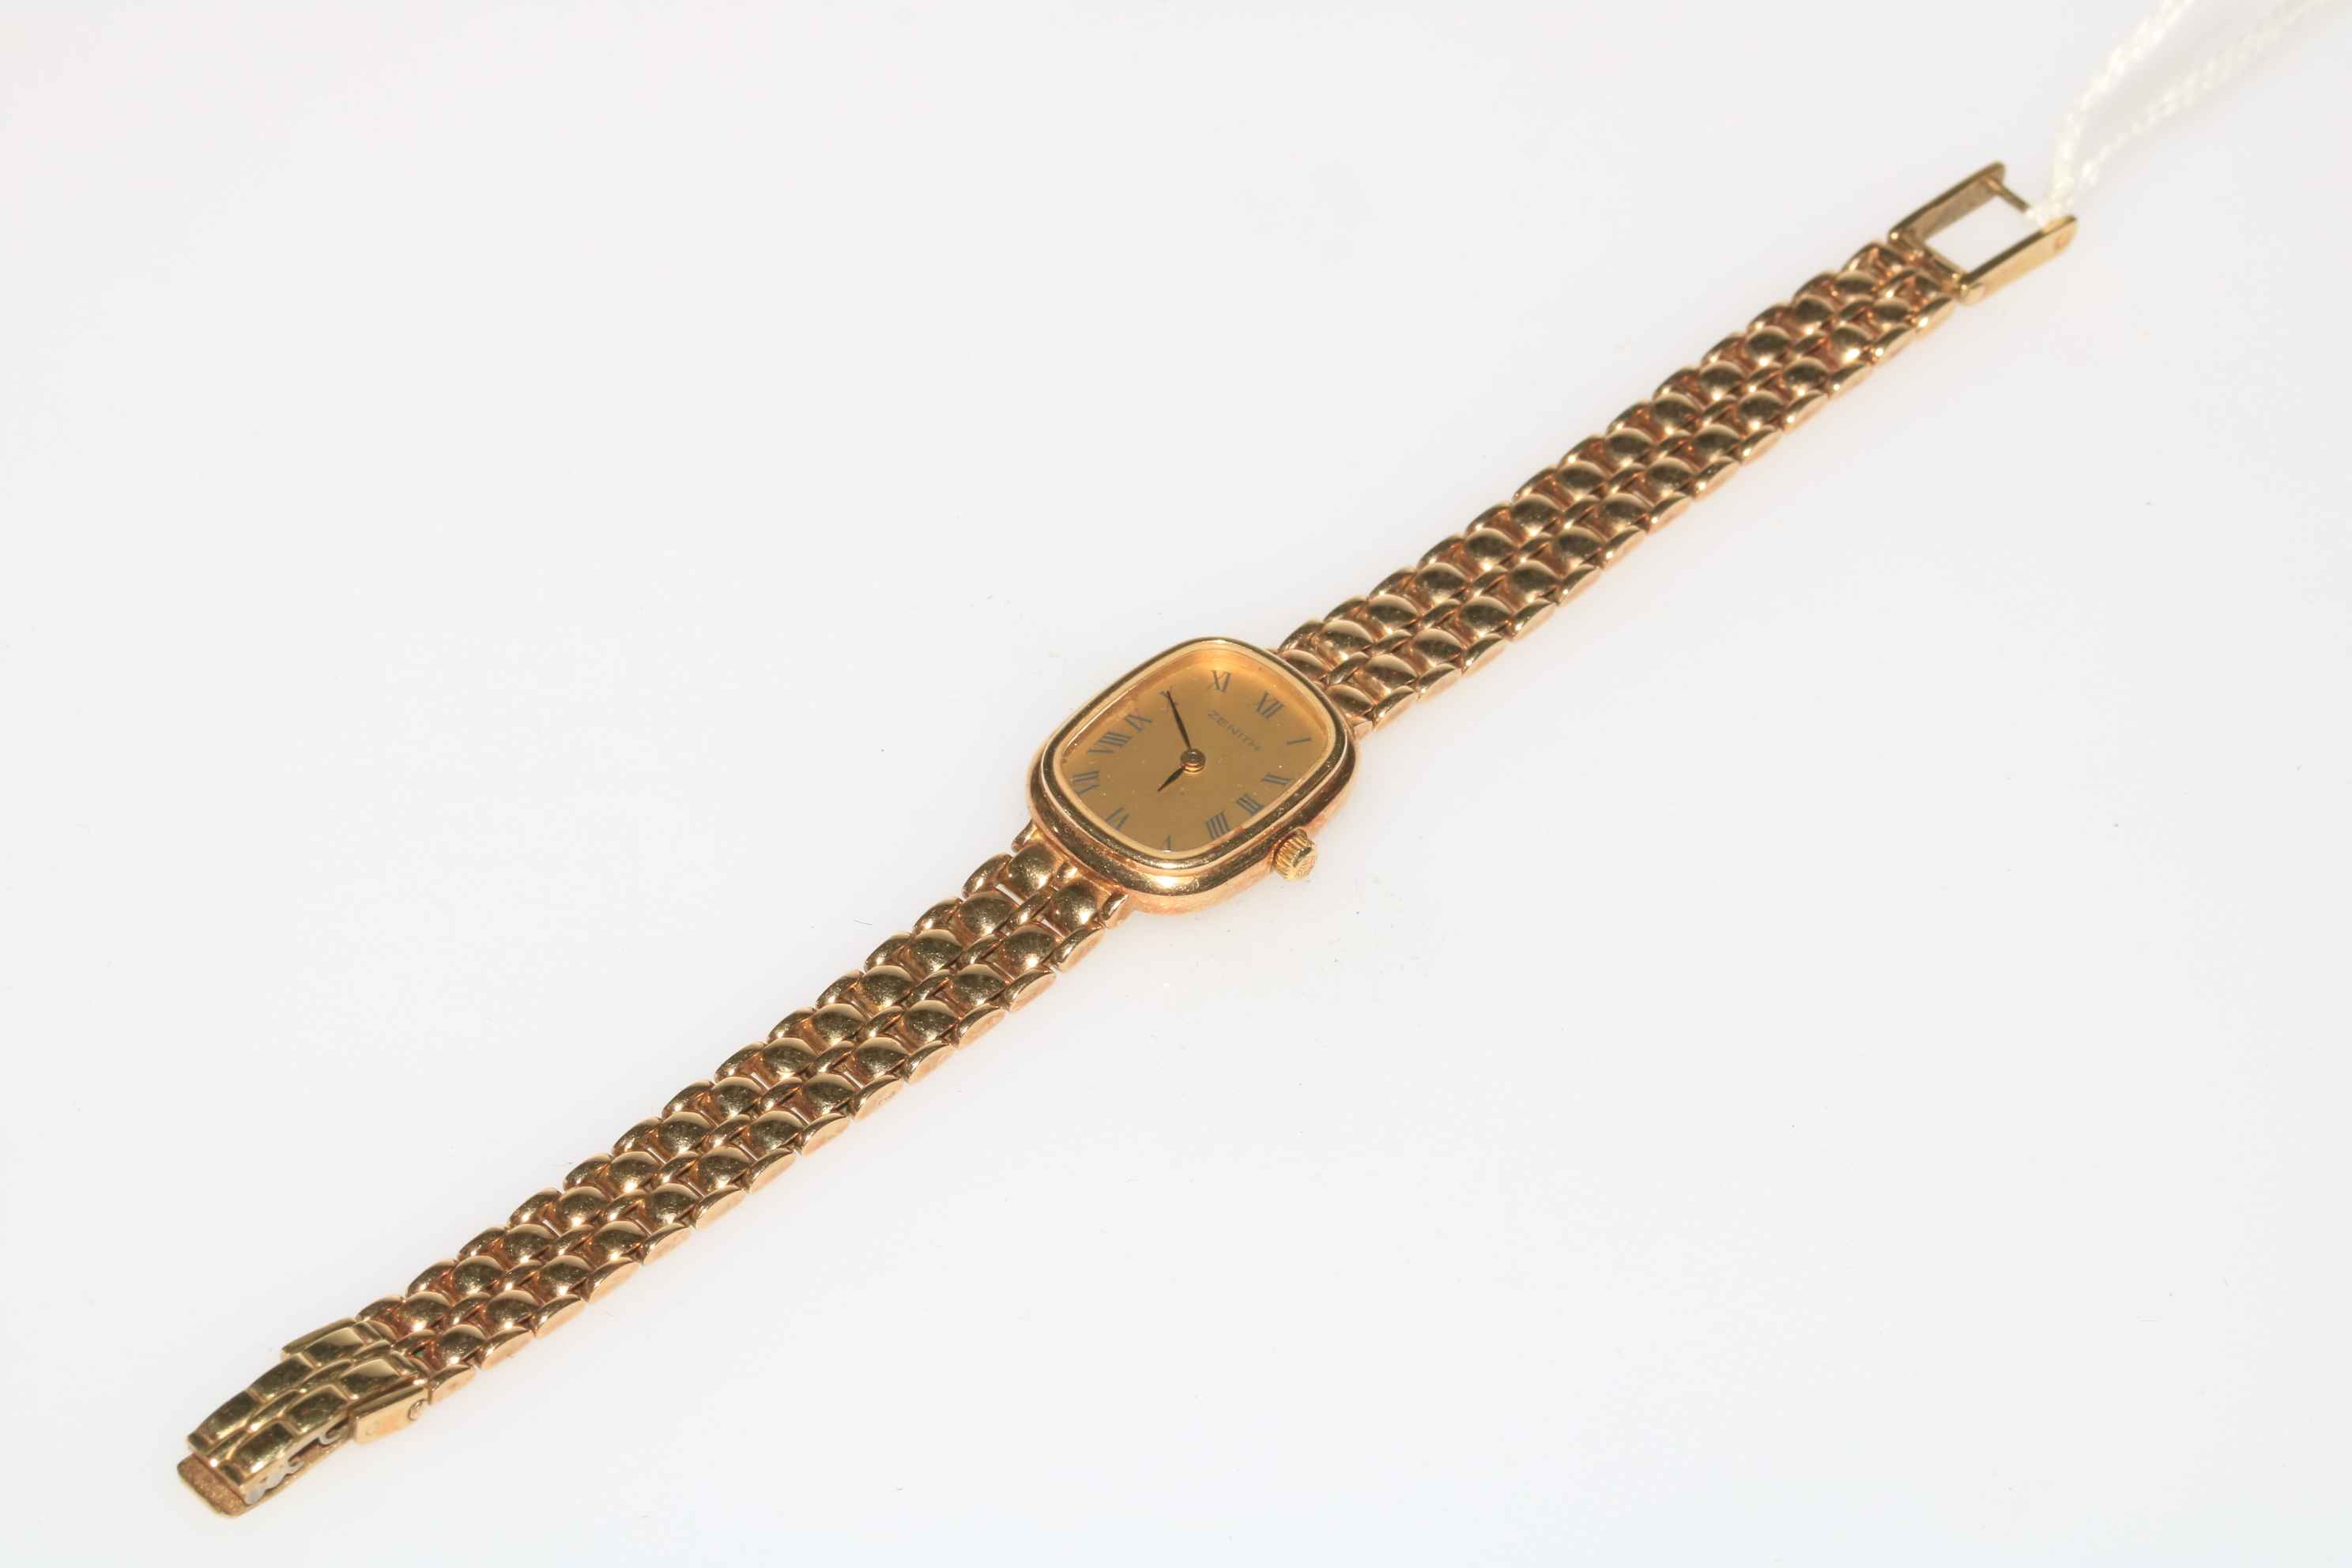 Zenith ladies 9 carat gold bracelet watch, with box.